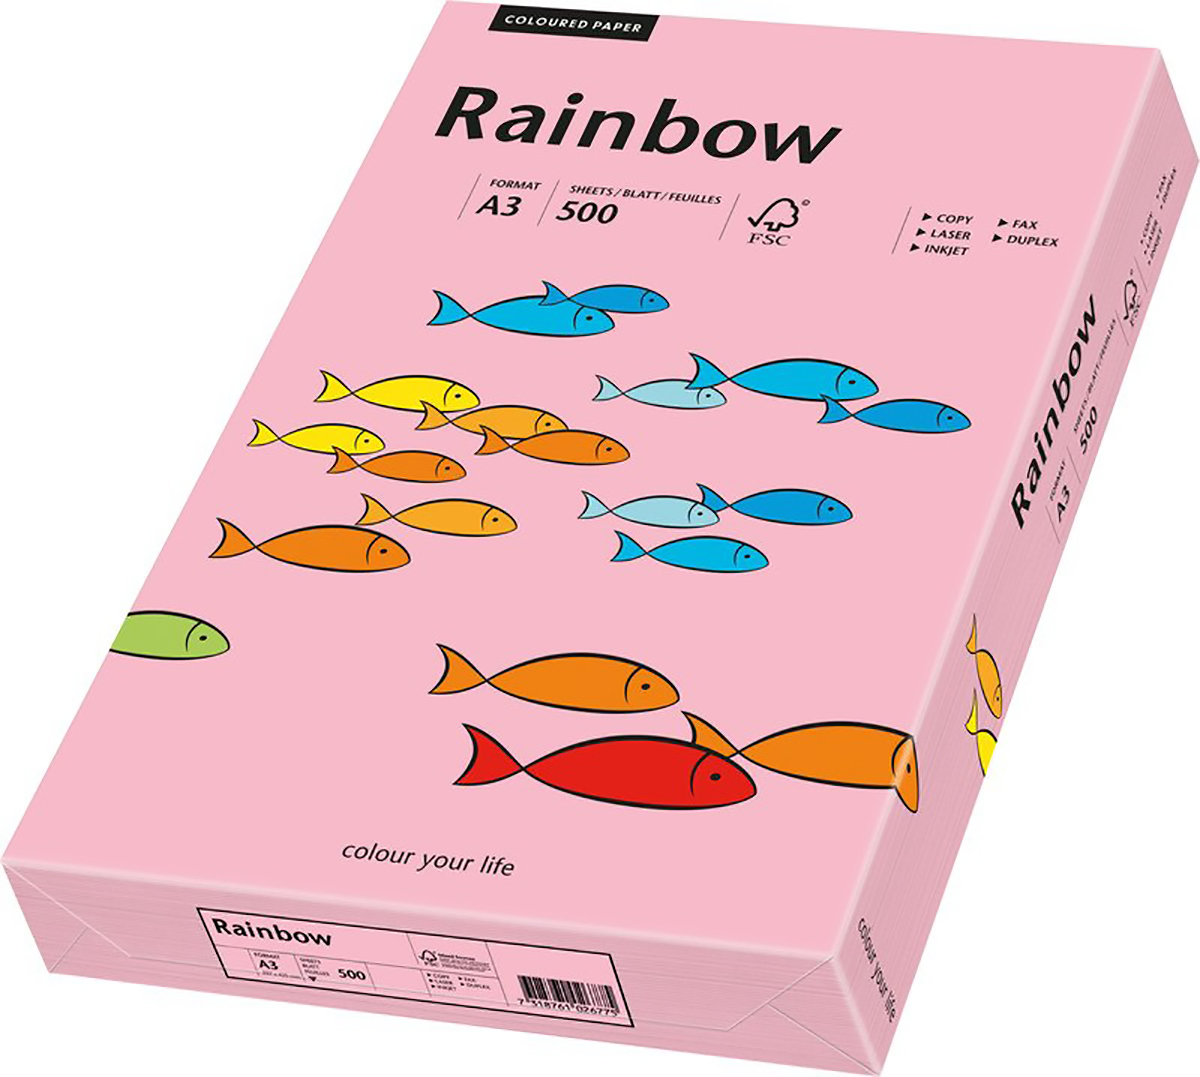 Rainbow A3 80gr rosa à 500 Pic1